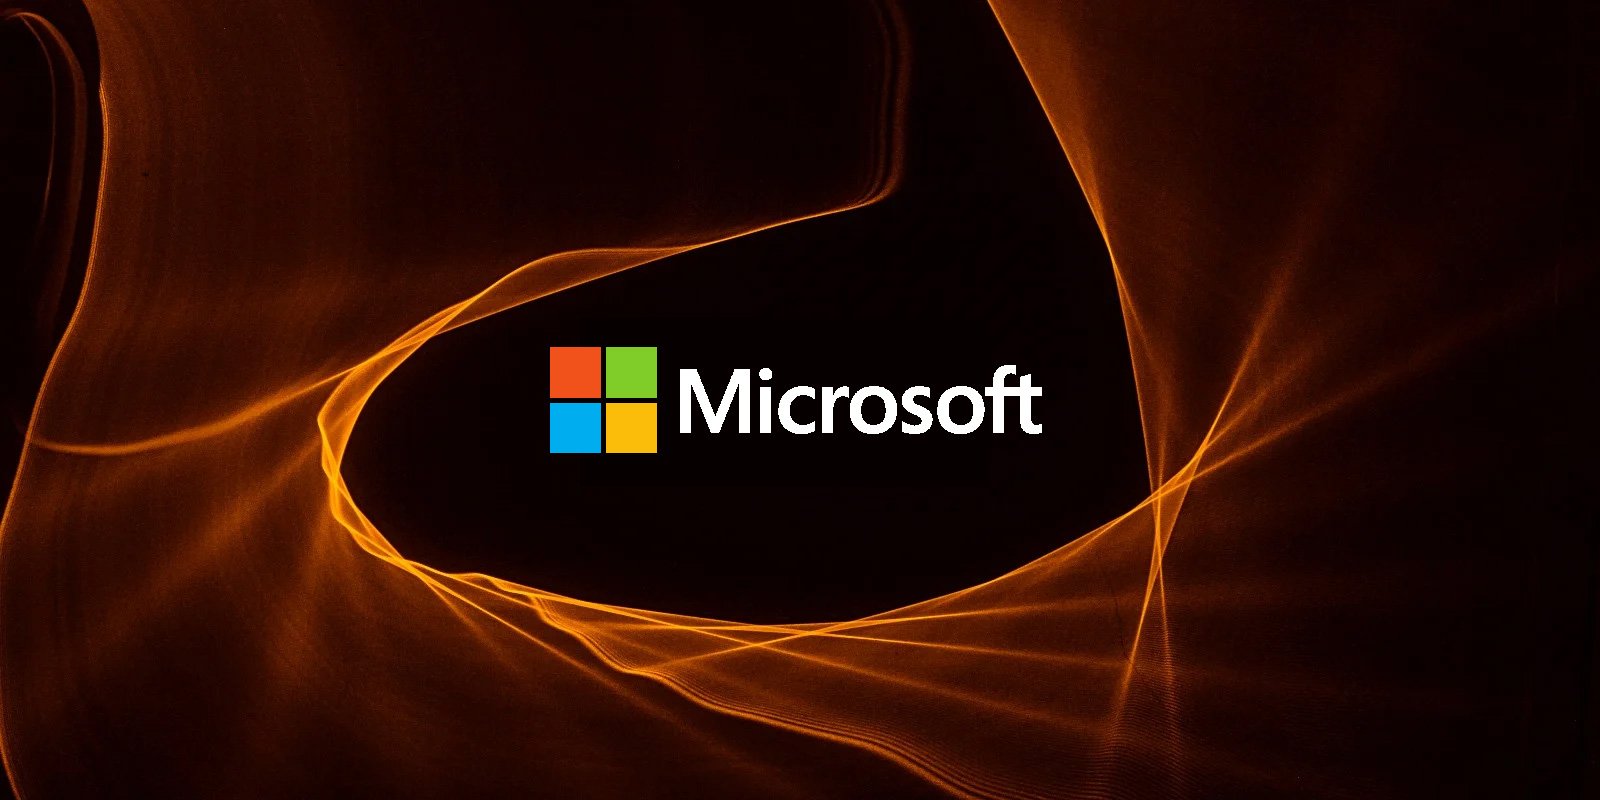 Microsoft logo in fire